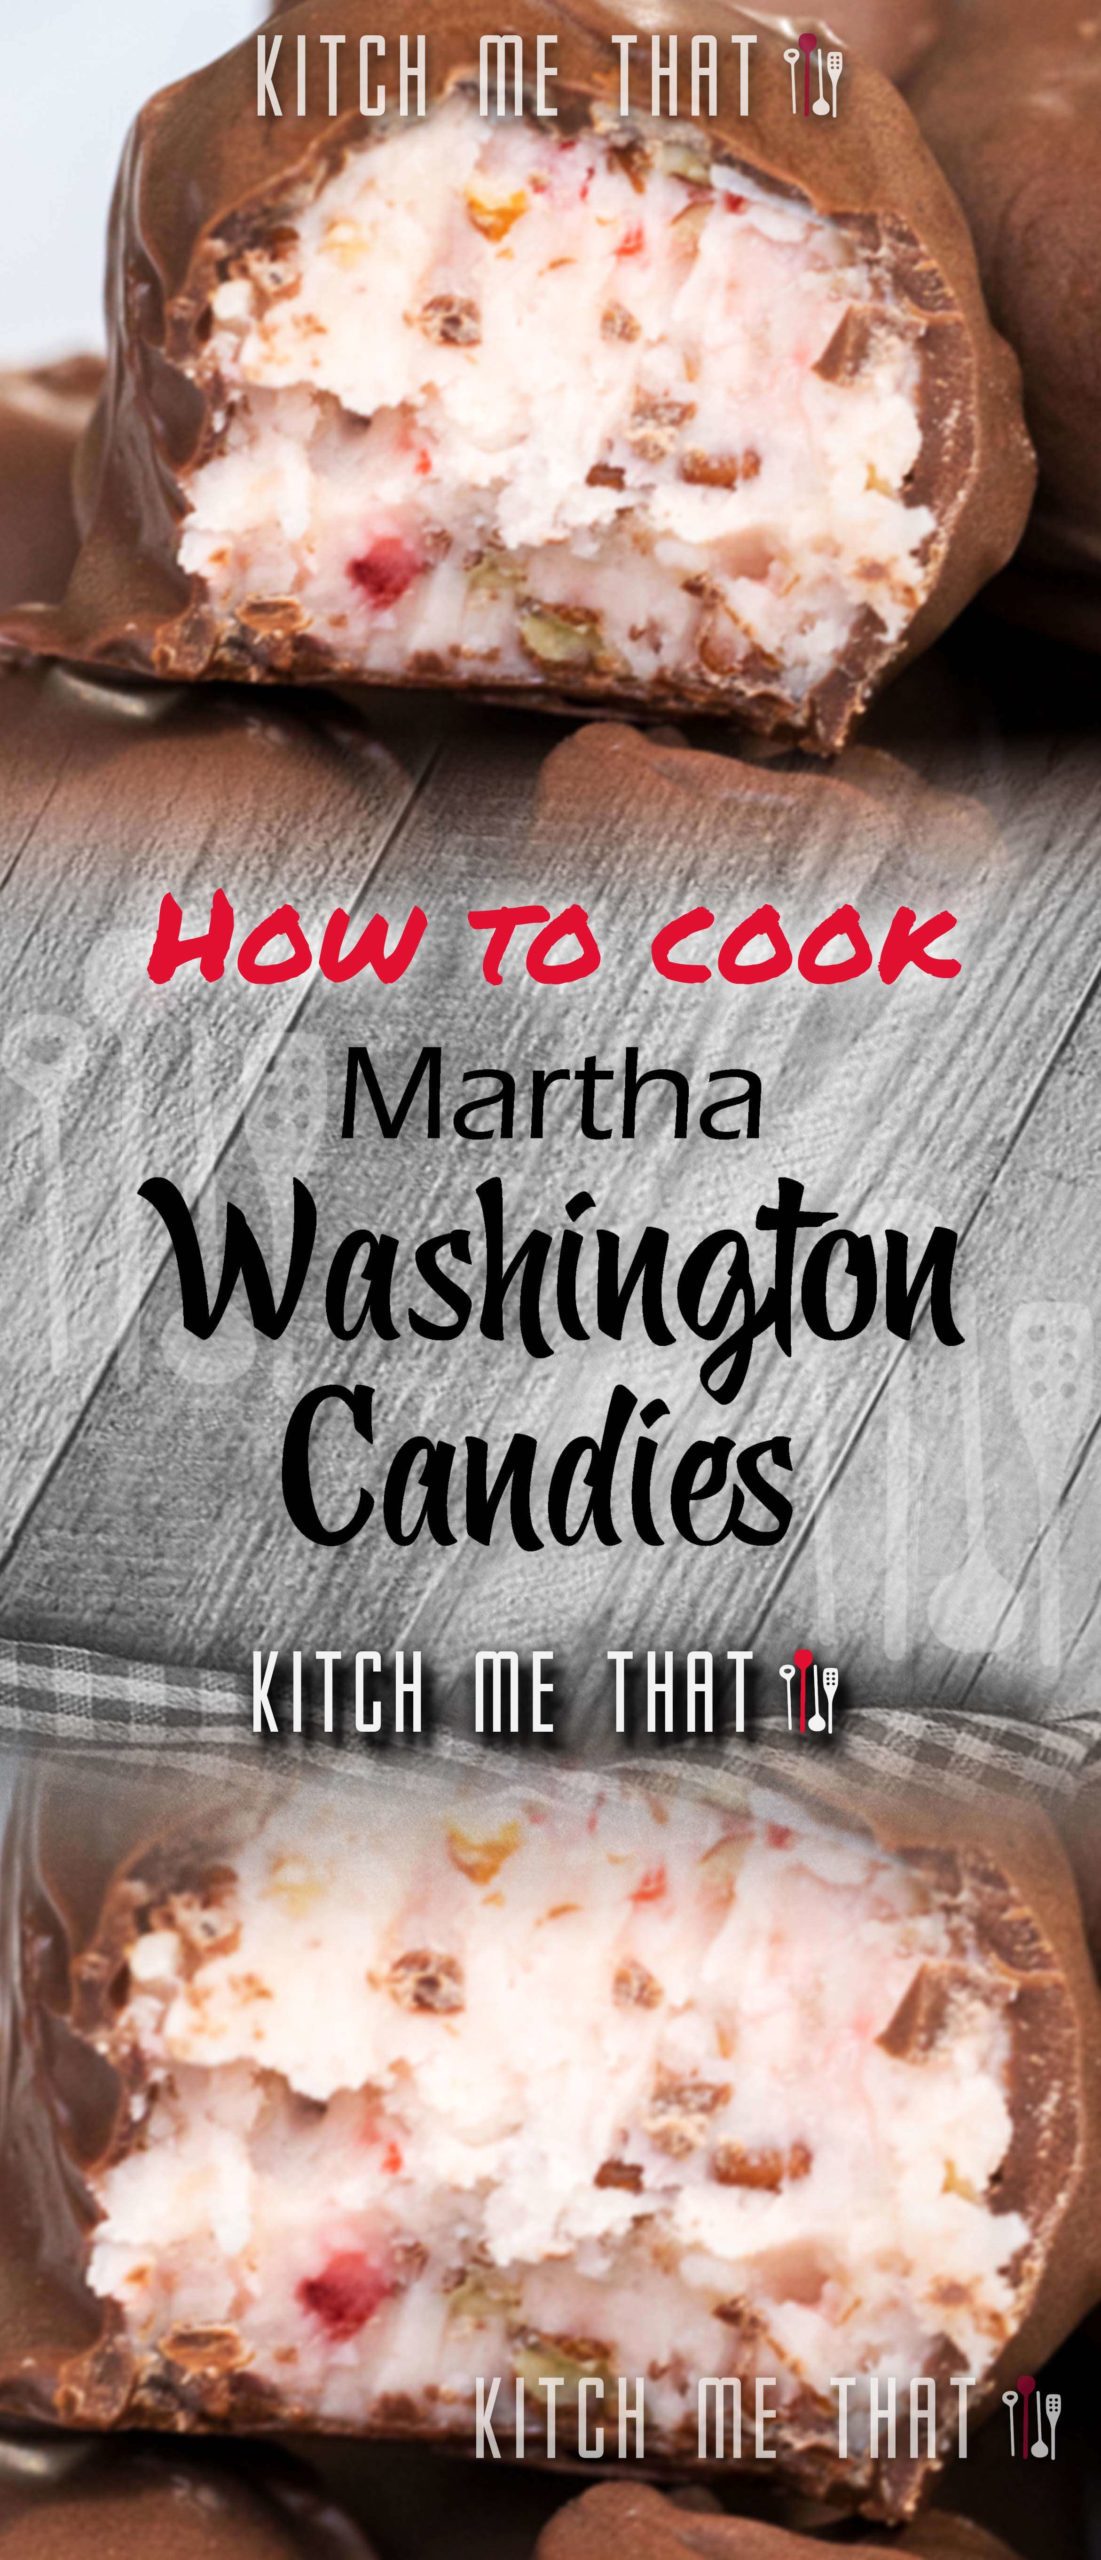 Martha Washington Candies